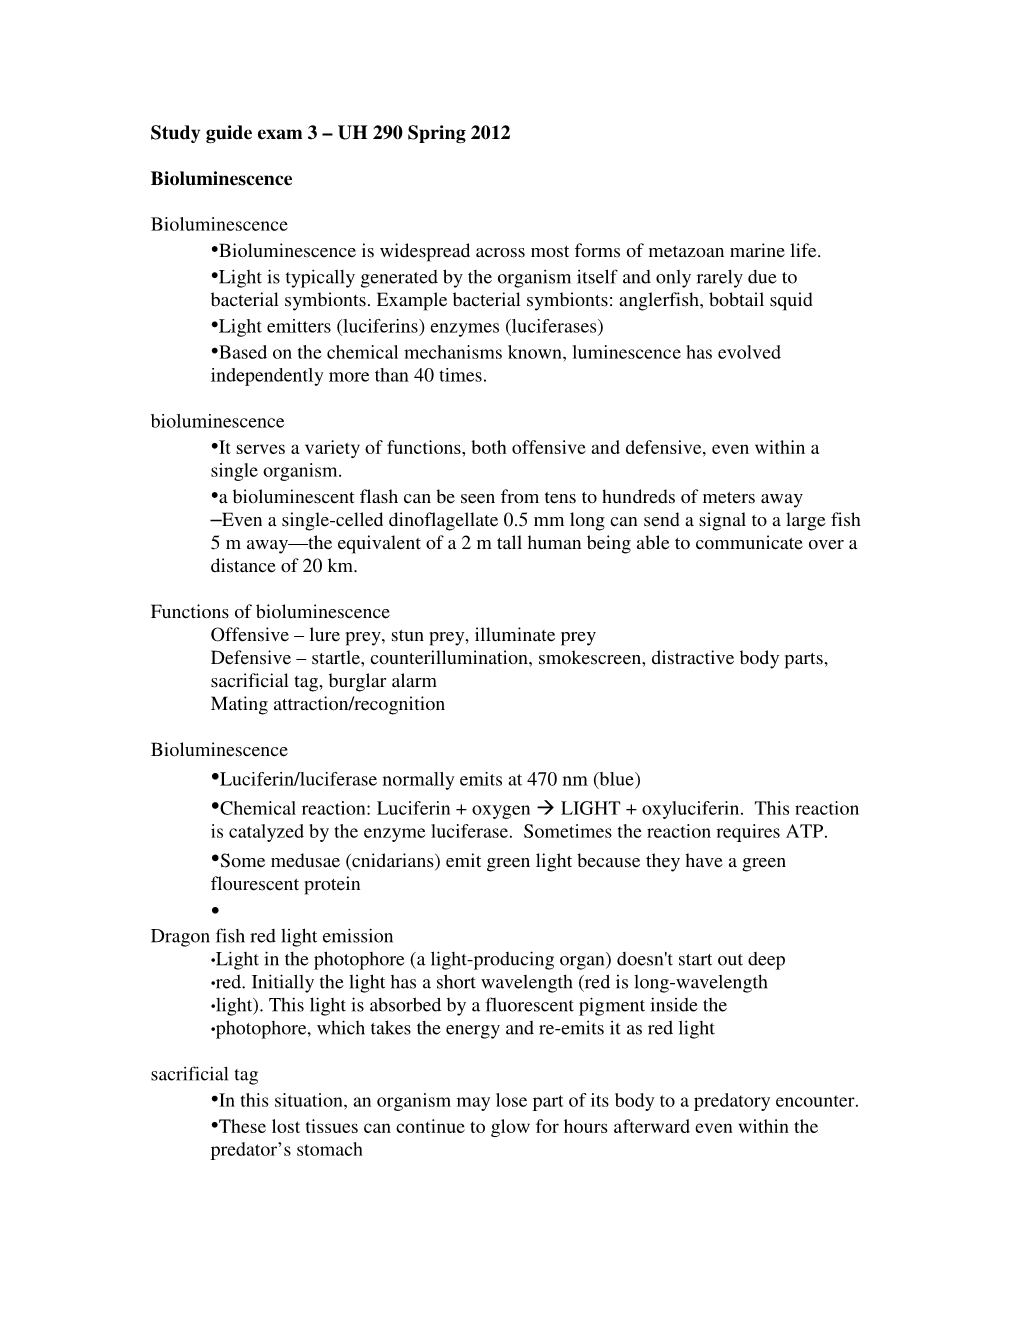 Study Guide Exam 3 – UH 290 Spring 2012 Bioluminescence